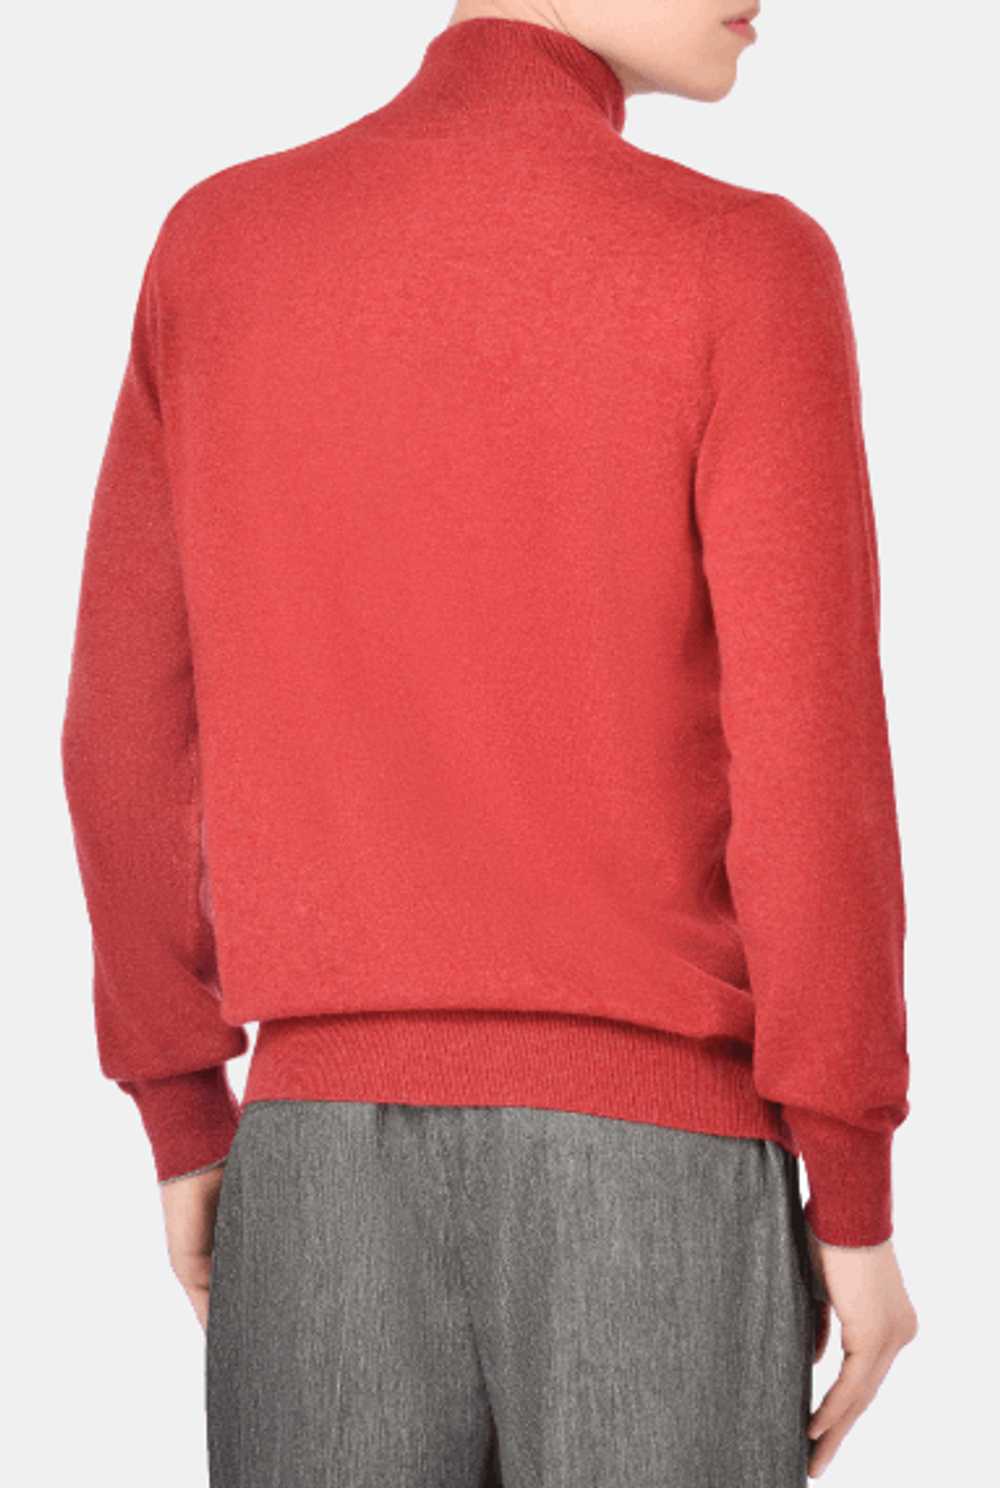 Brunello Cucinelli o1w1db10524 Sweaters in Red - image 2